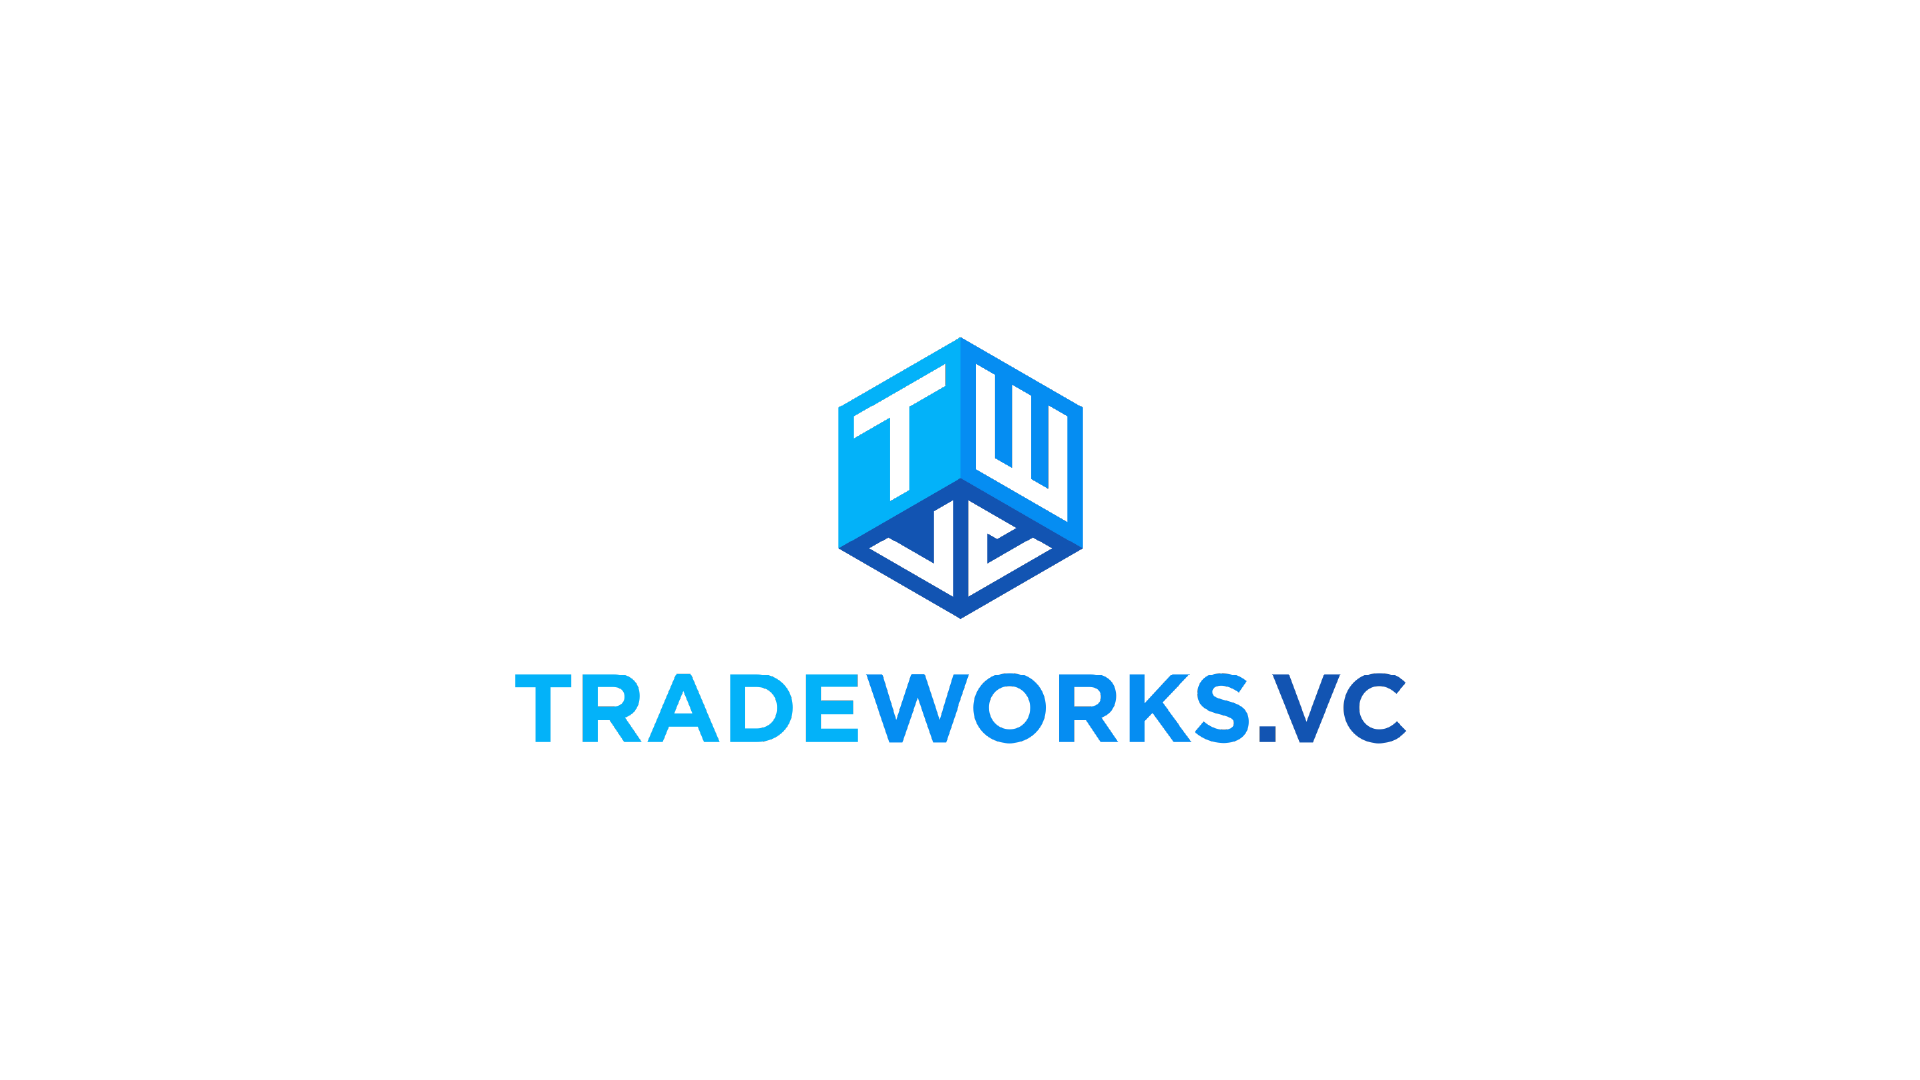 Tradeworks.vc